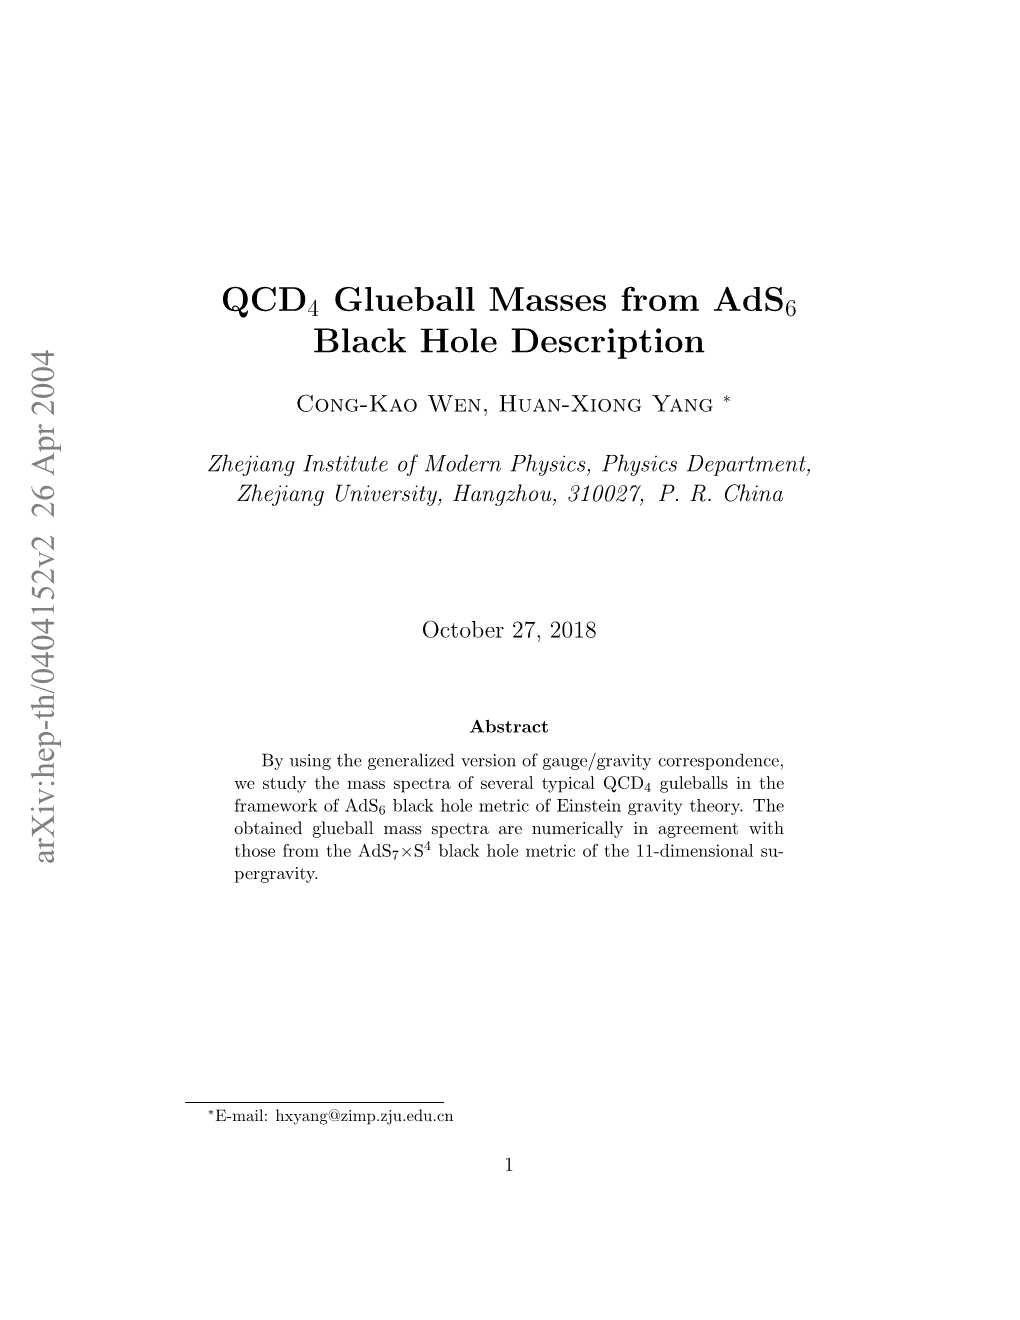 QCD4 Glueball Masses from Ads6 Black Hole Description